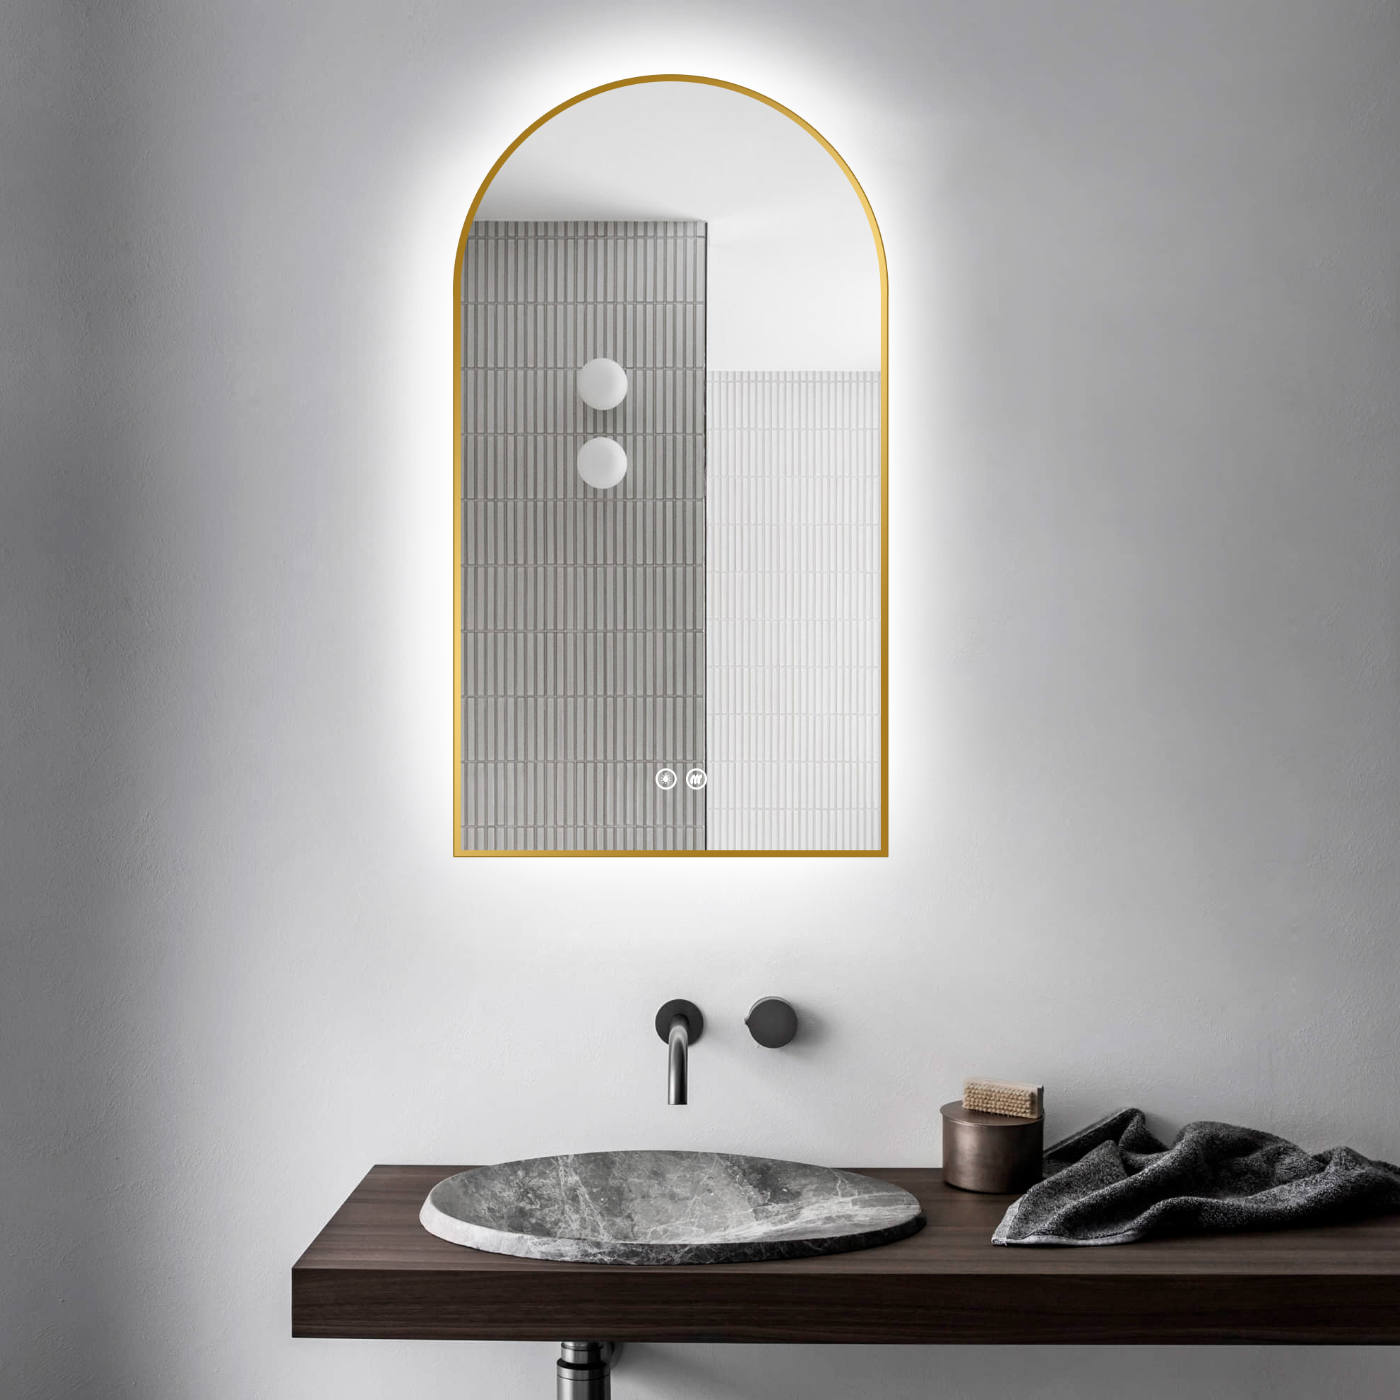 LED Badspiegel, design bogenform Spiegel, Badspiegel mit led Beleuchtung